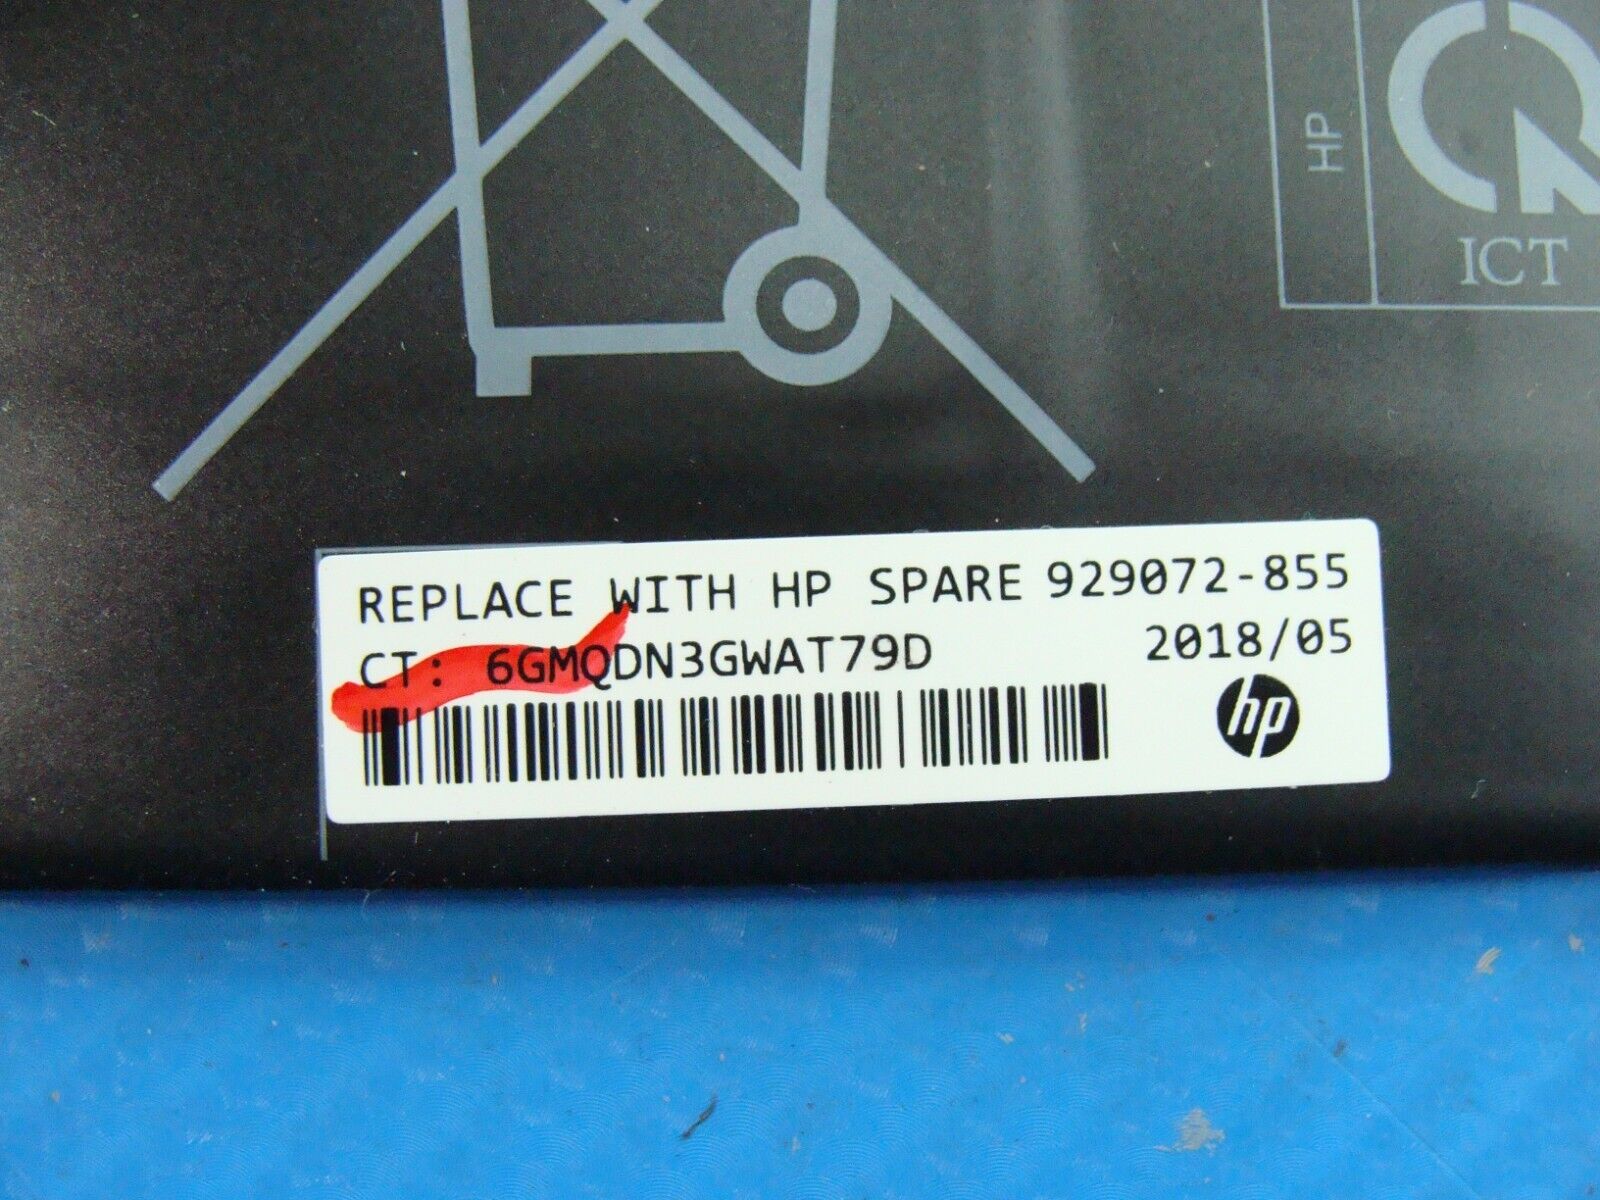 HP Spectre x360 13.3